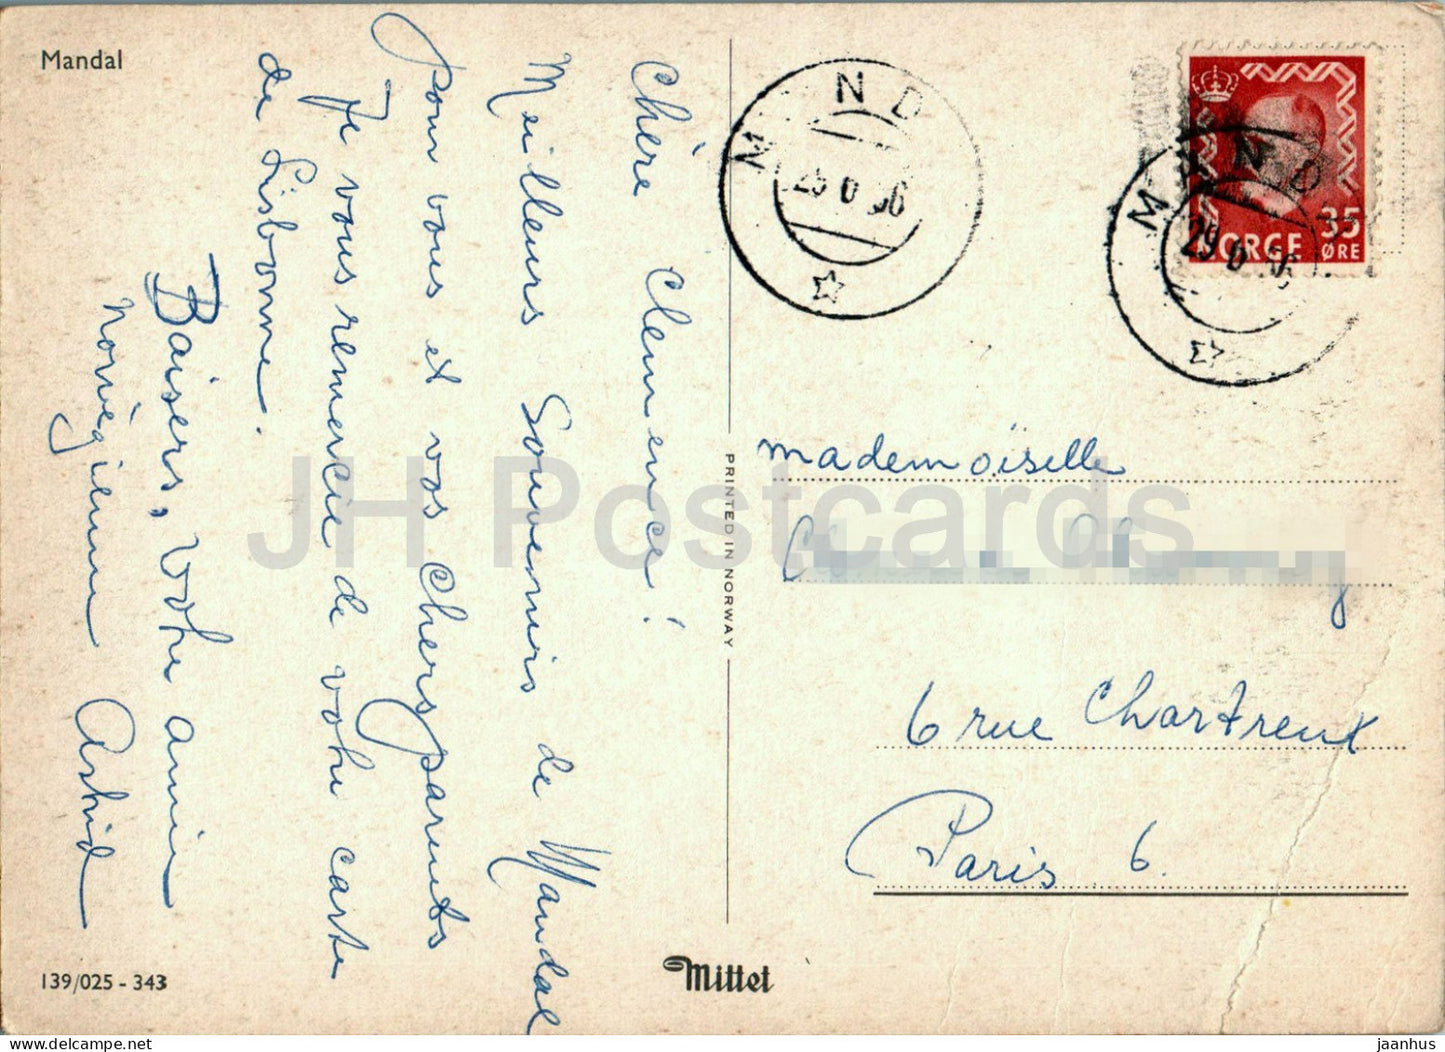 Mandal – alte Postkarte – 1956 – Norwegen – gebraucht 